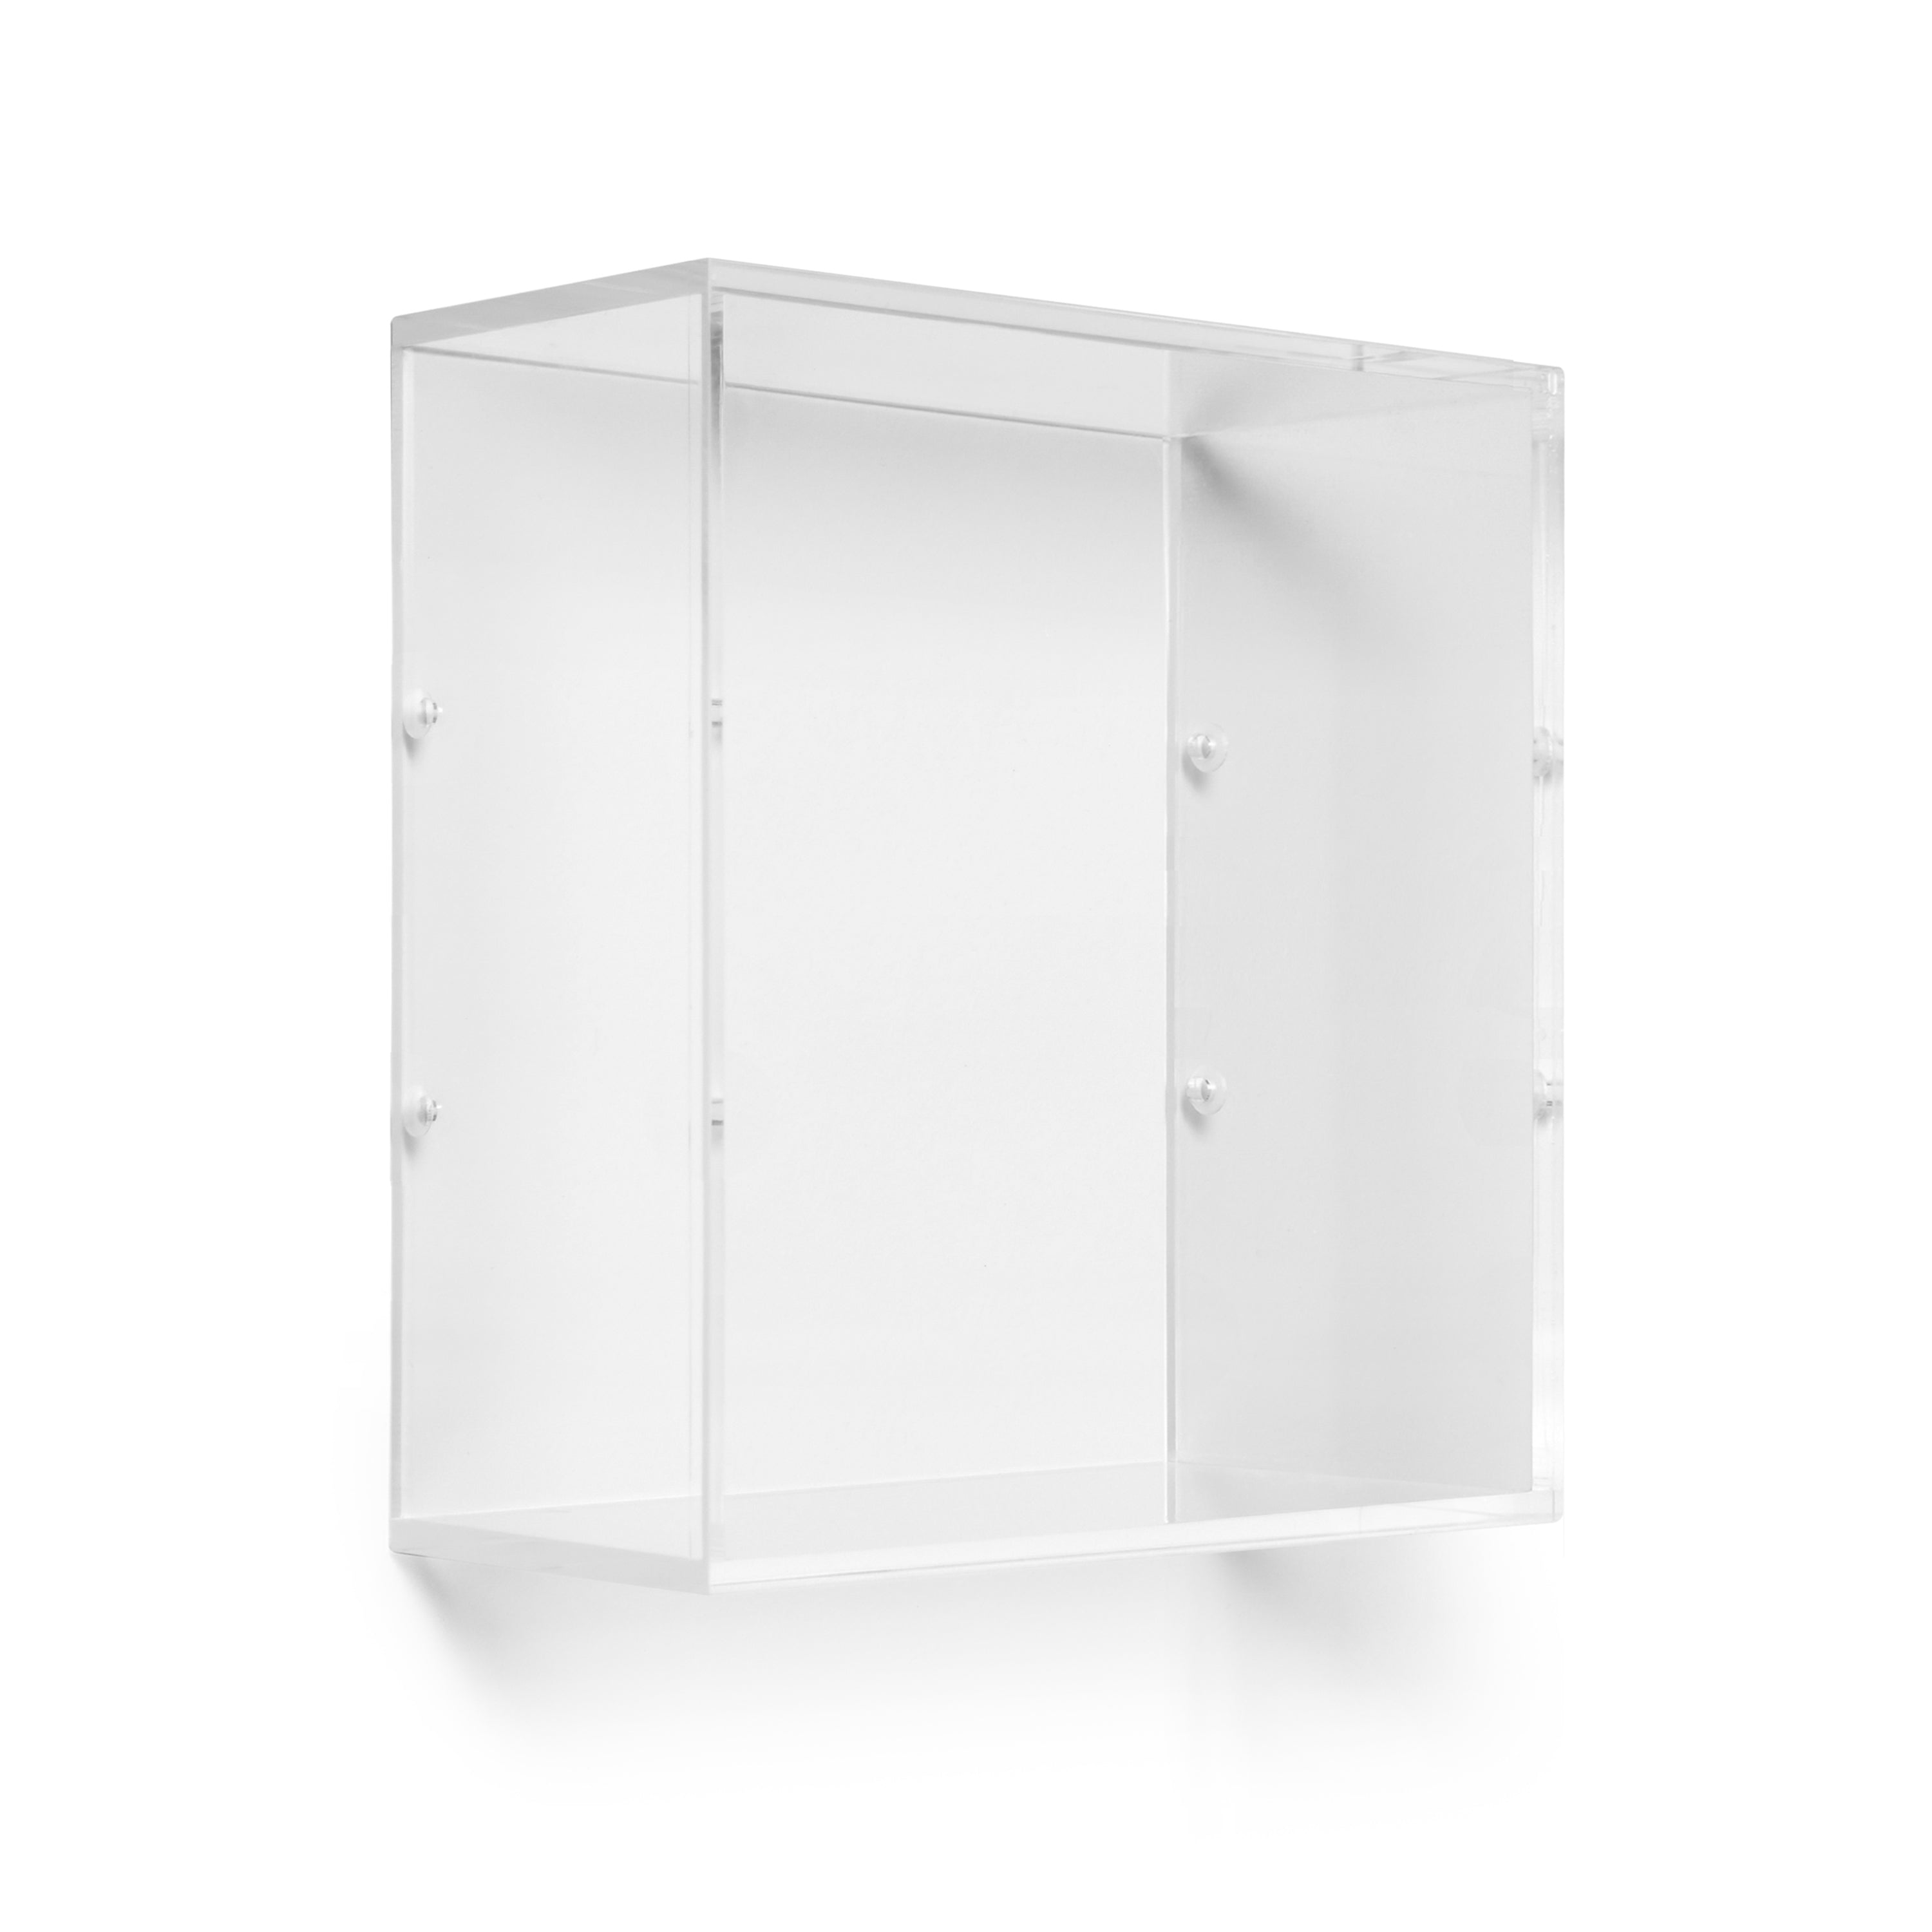 Chadko 18D x 24W Translucent Shelf Liner, Plastic